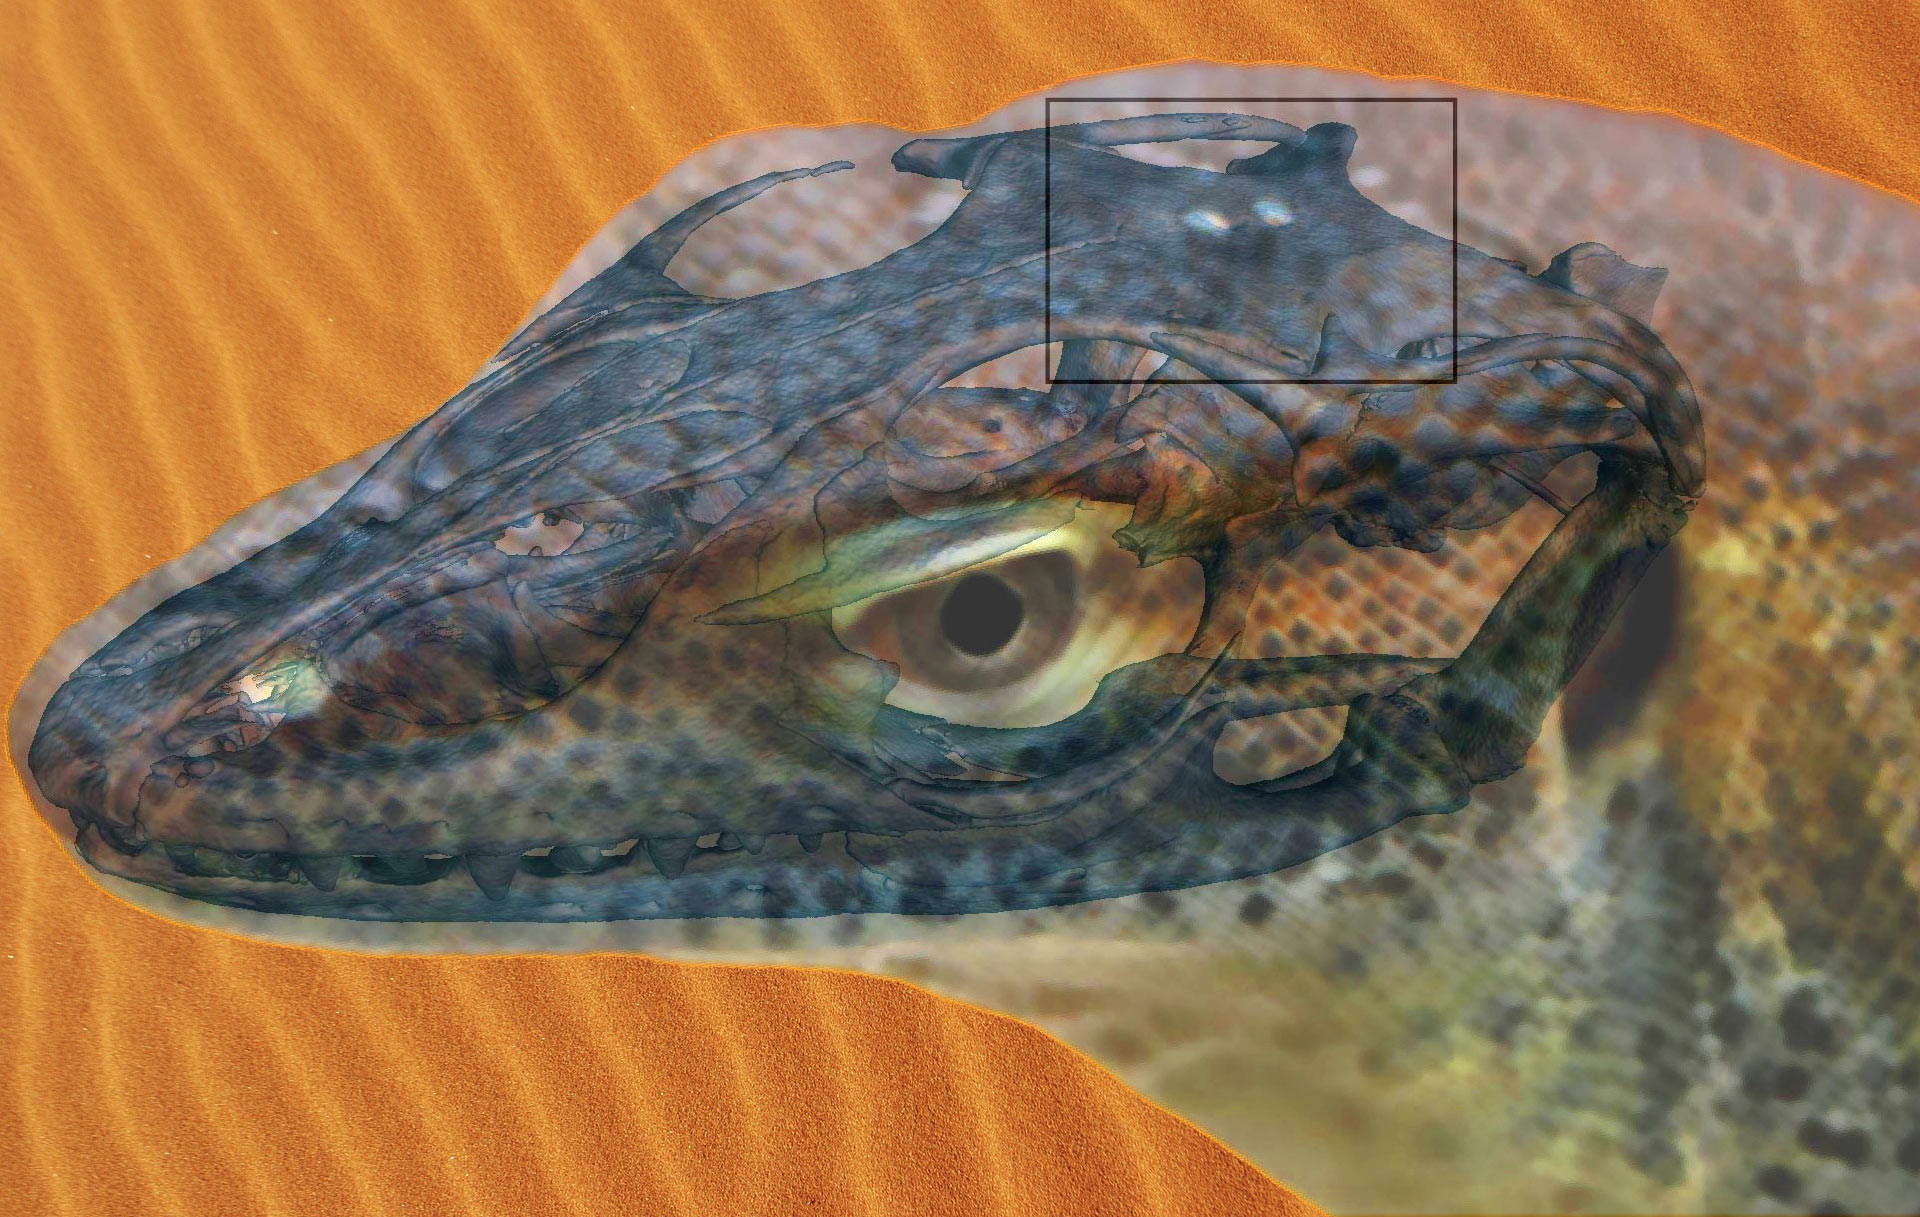 Eocene Monitor Lizard Had Four Eyes: Study | Paleontology | Sci-News.com